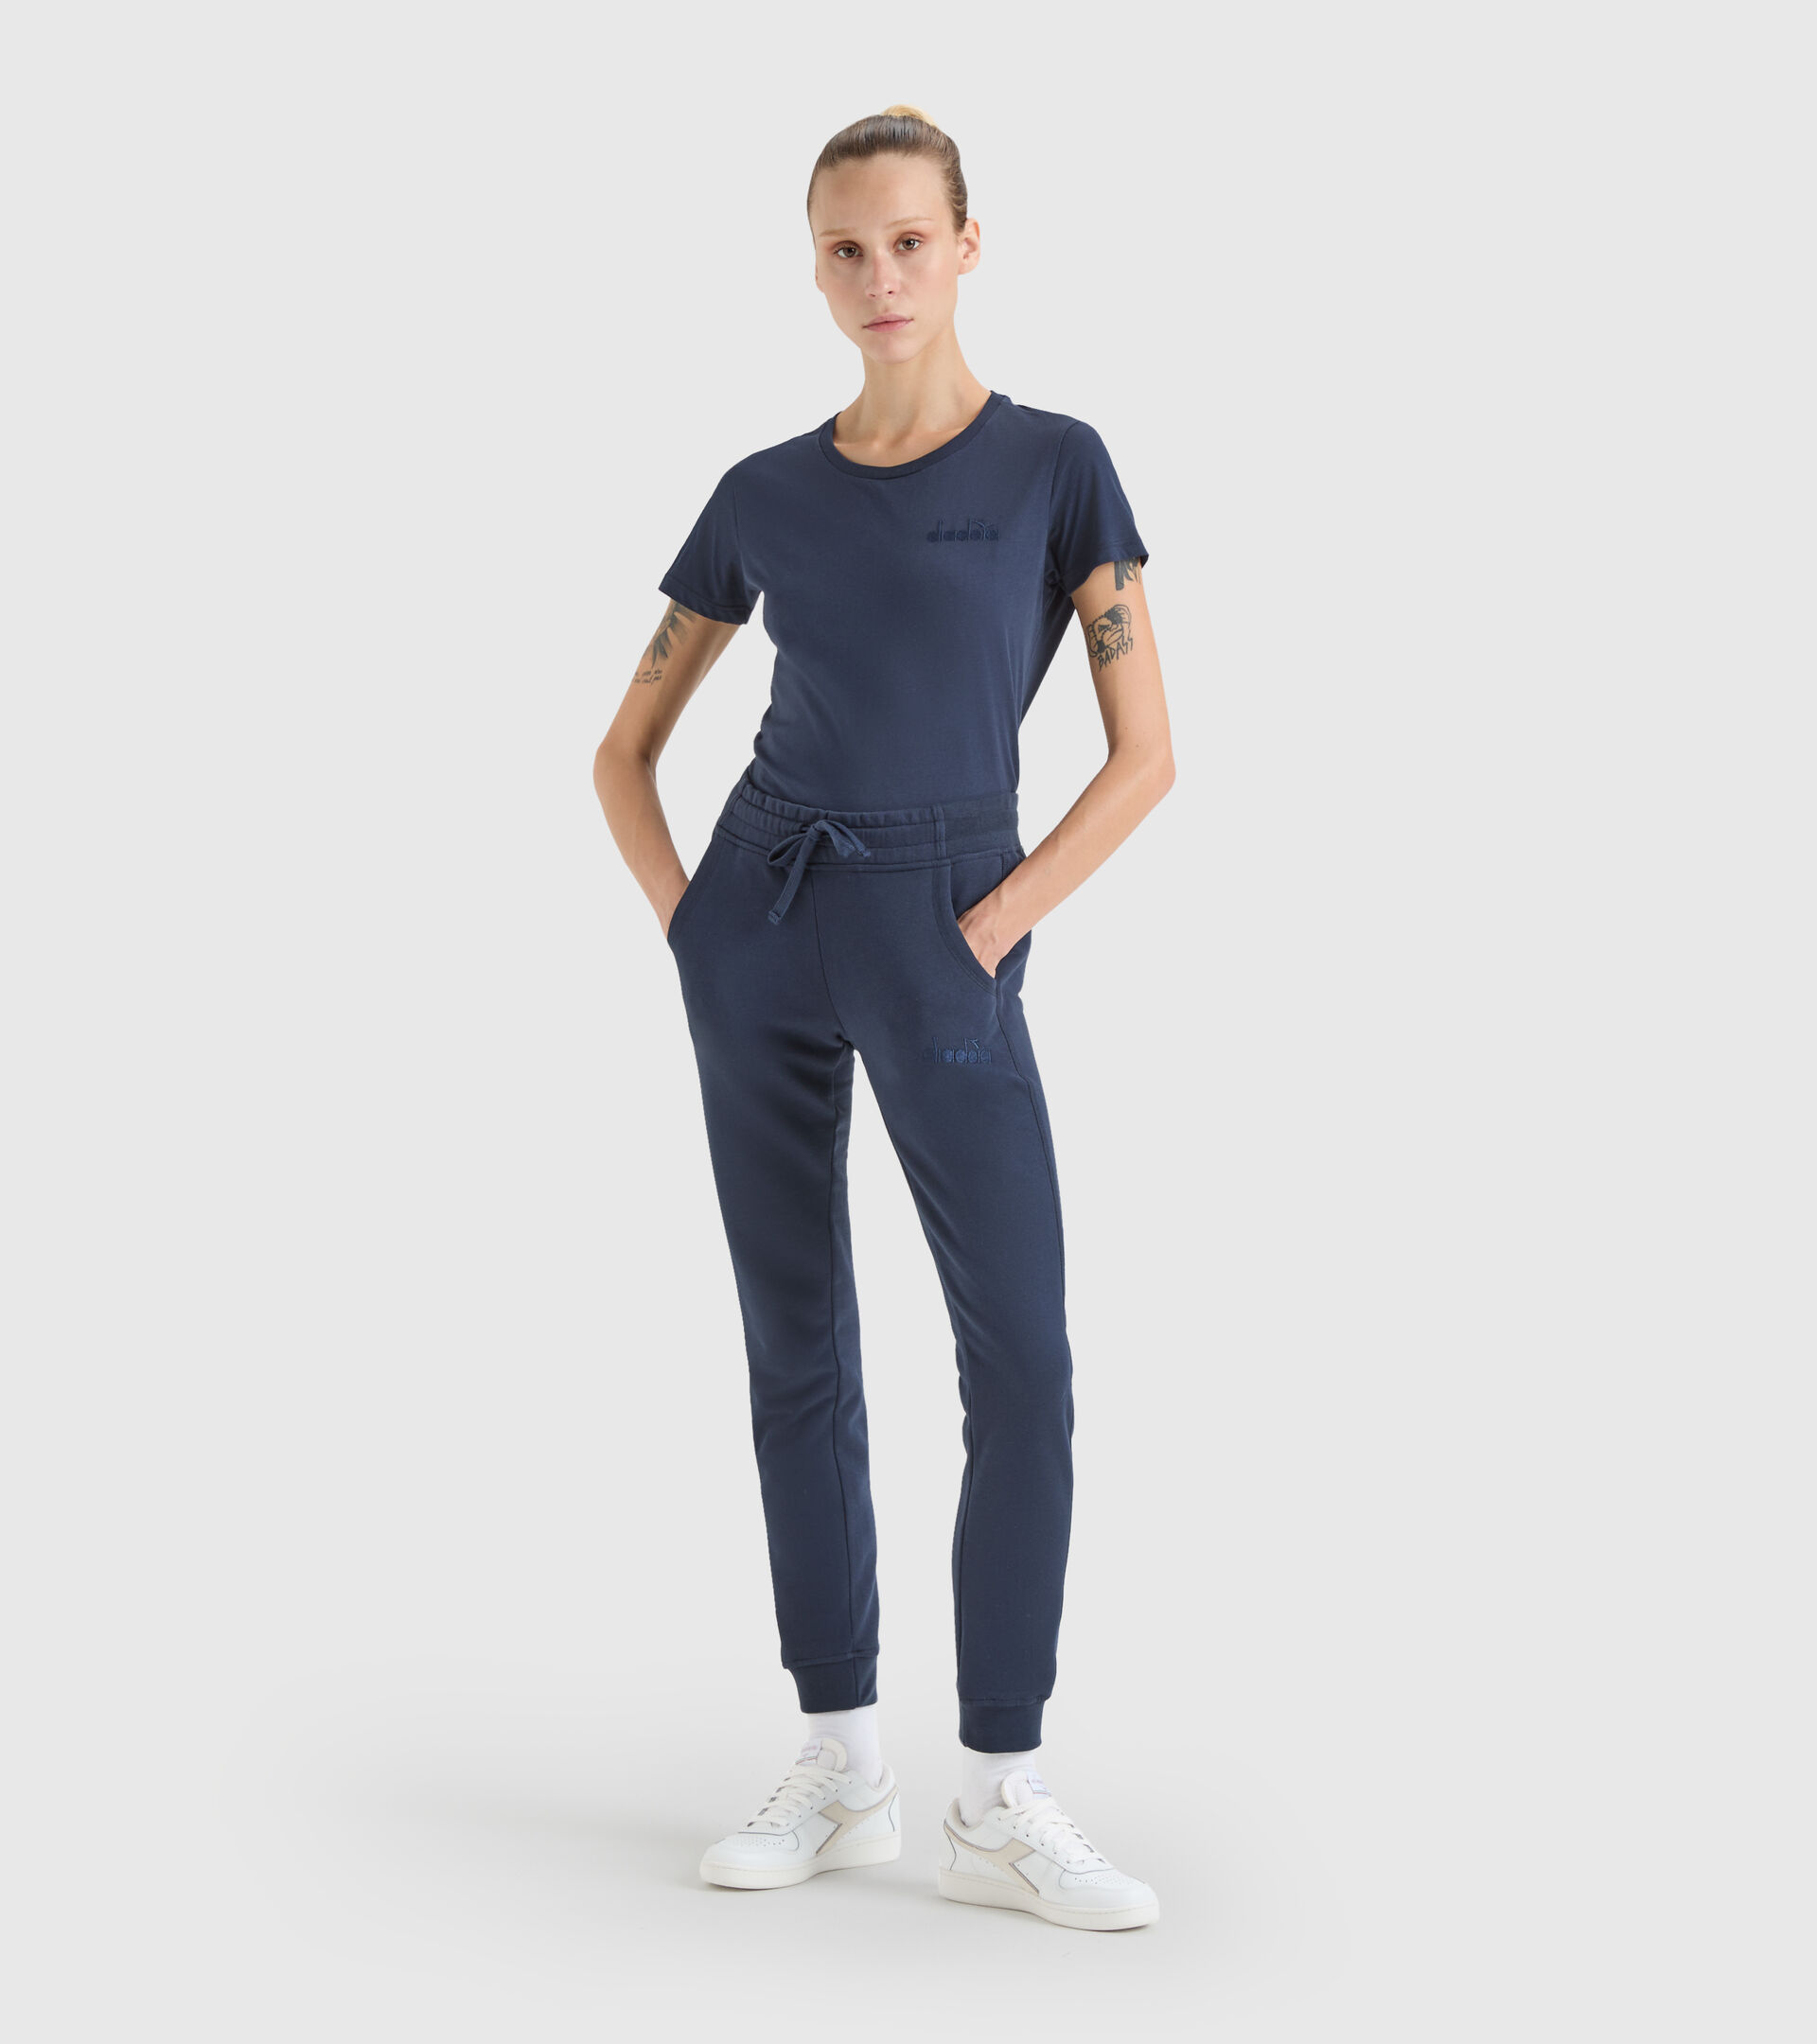 Cotton sports trousers - Made in Italy - Women L. JOGGER PANT MII BLUE CORSAIR - Diadora